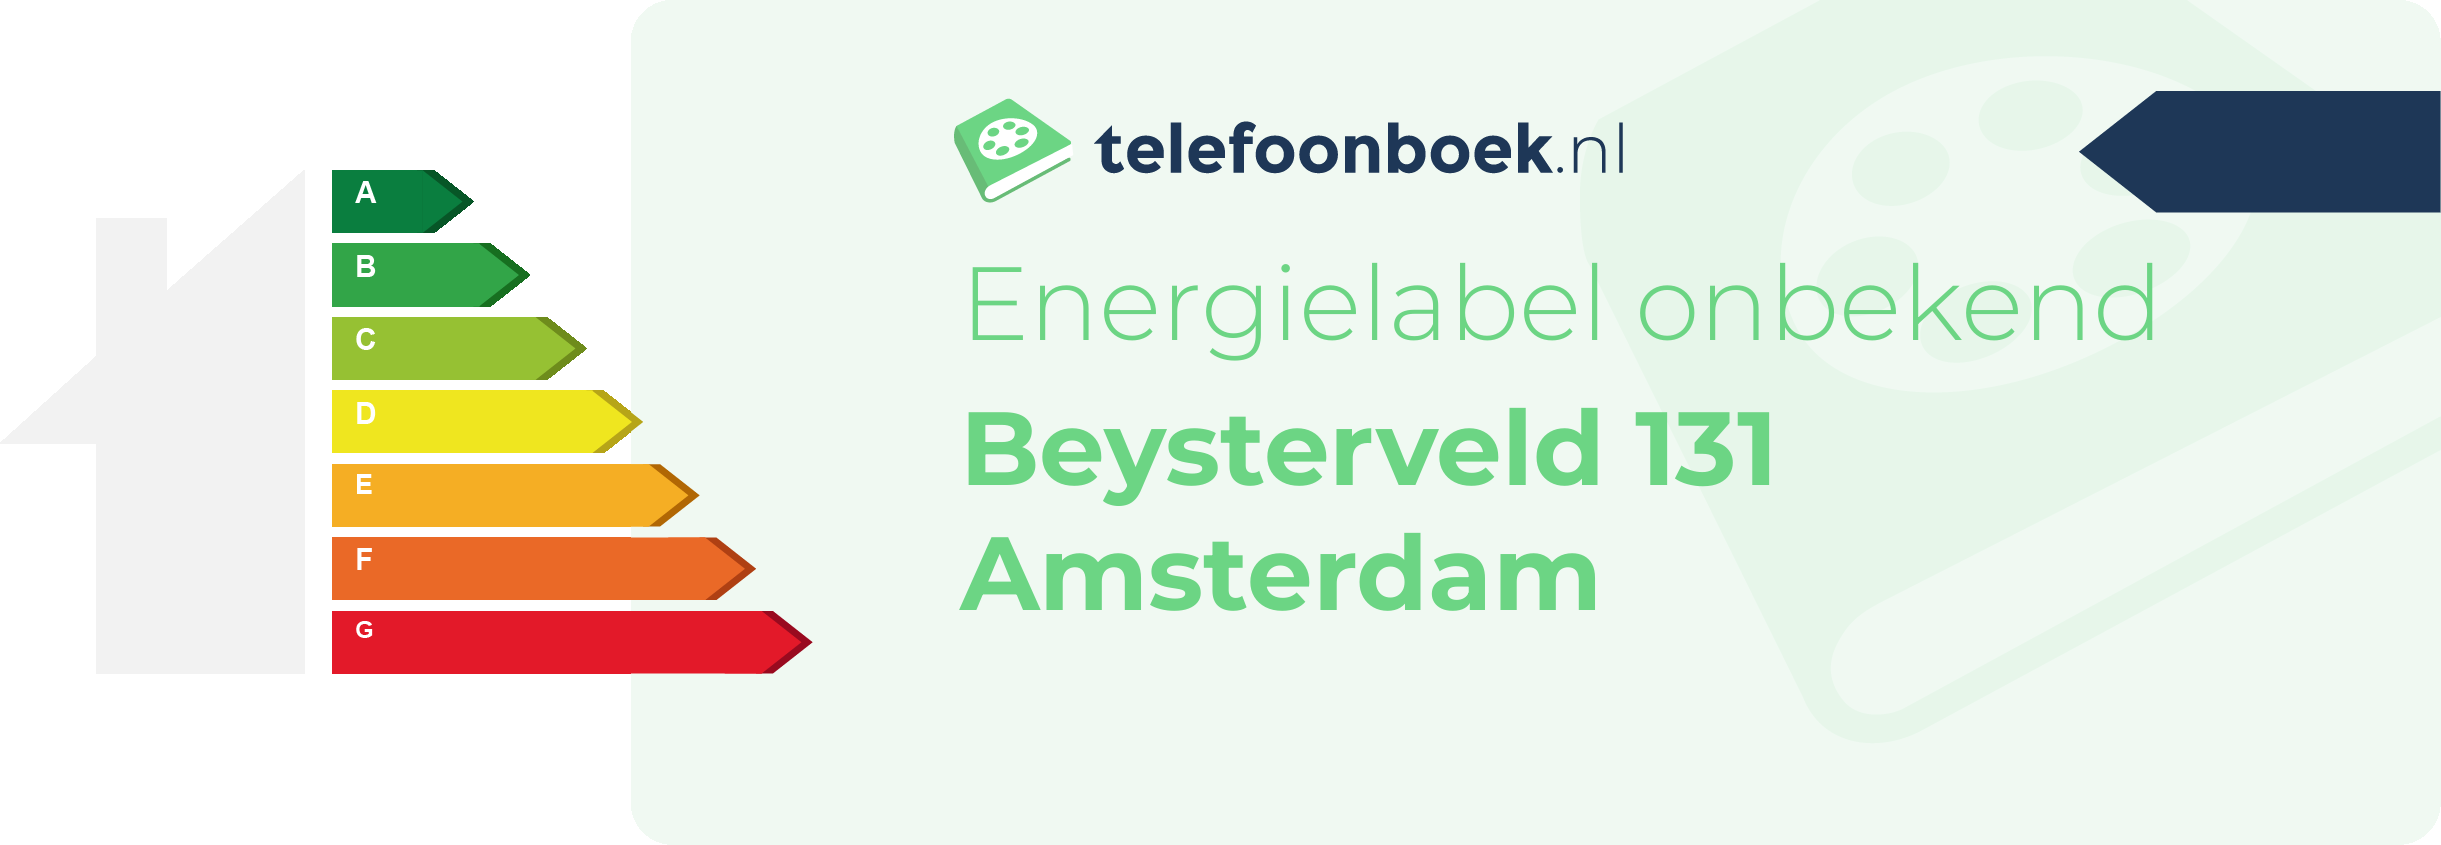 Energielabel Beysterveld 131 Amsterdam